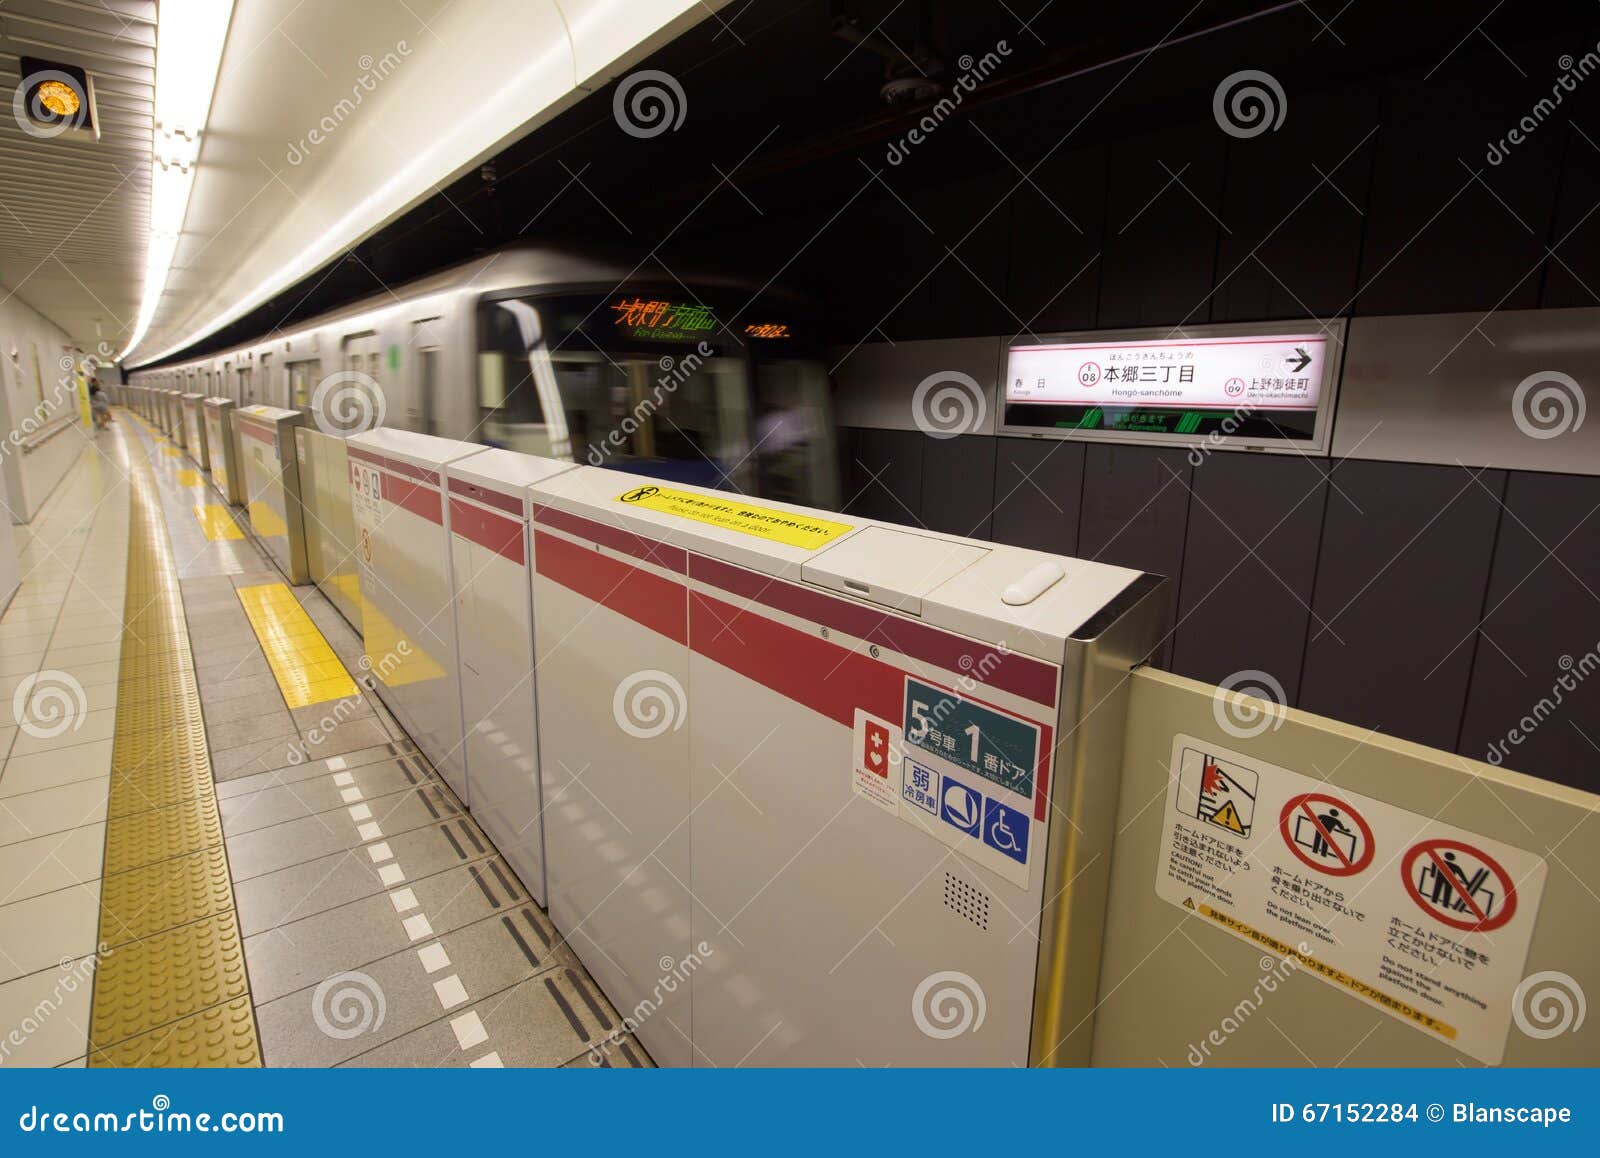 Tokyo subway train. TOKYO, JAPAN- NOVEMBER 08, 2015: Motion train at Hongo-sanchome metro station. With more than 3.1 billion annual passenger rides, Tokyo subway system is the busiest worldwide.